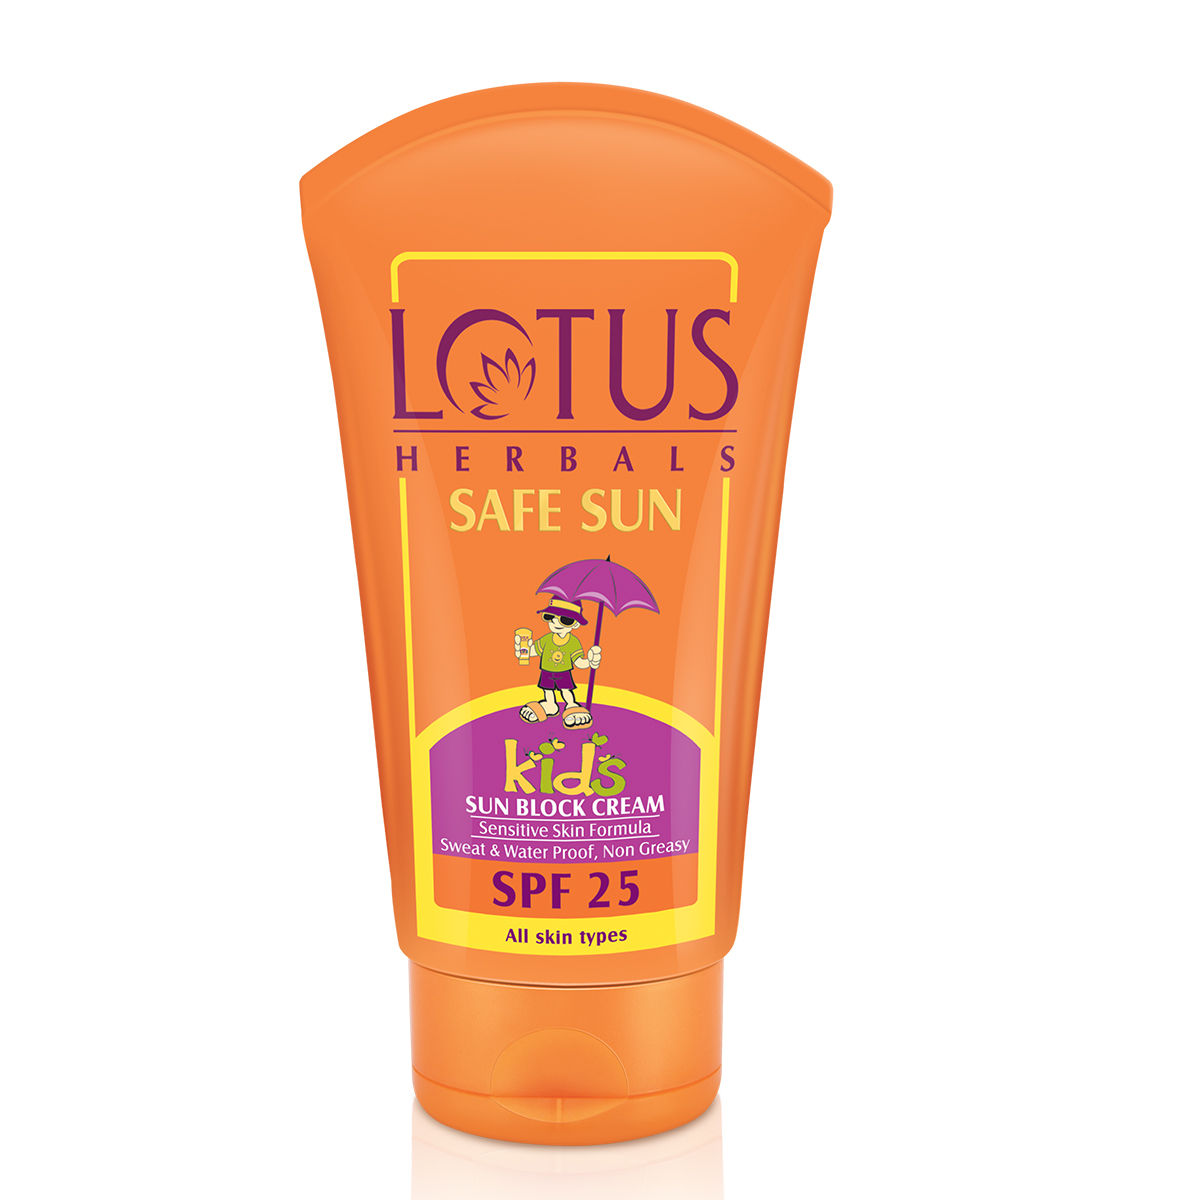 Buy Lotus Herbals Safe Sun Kids Sun Block Cream SPF 25, 100 gm Online